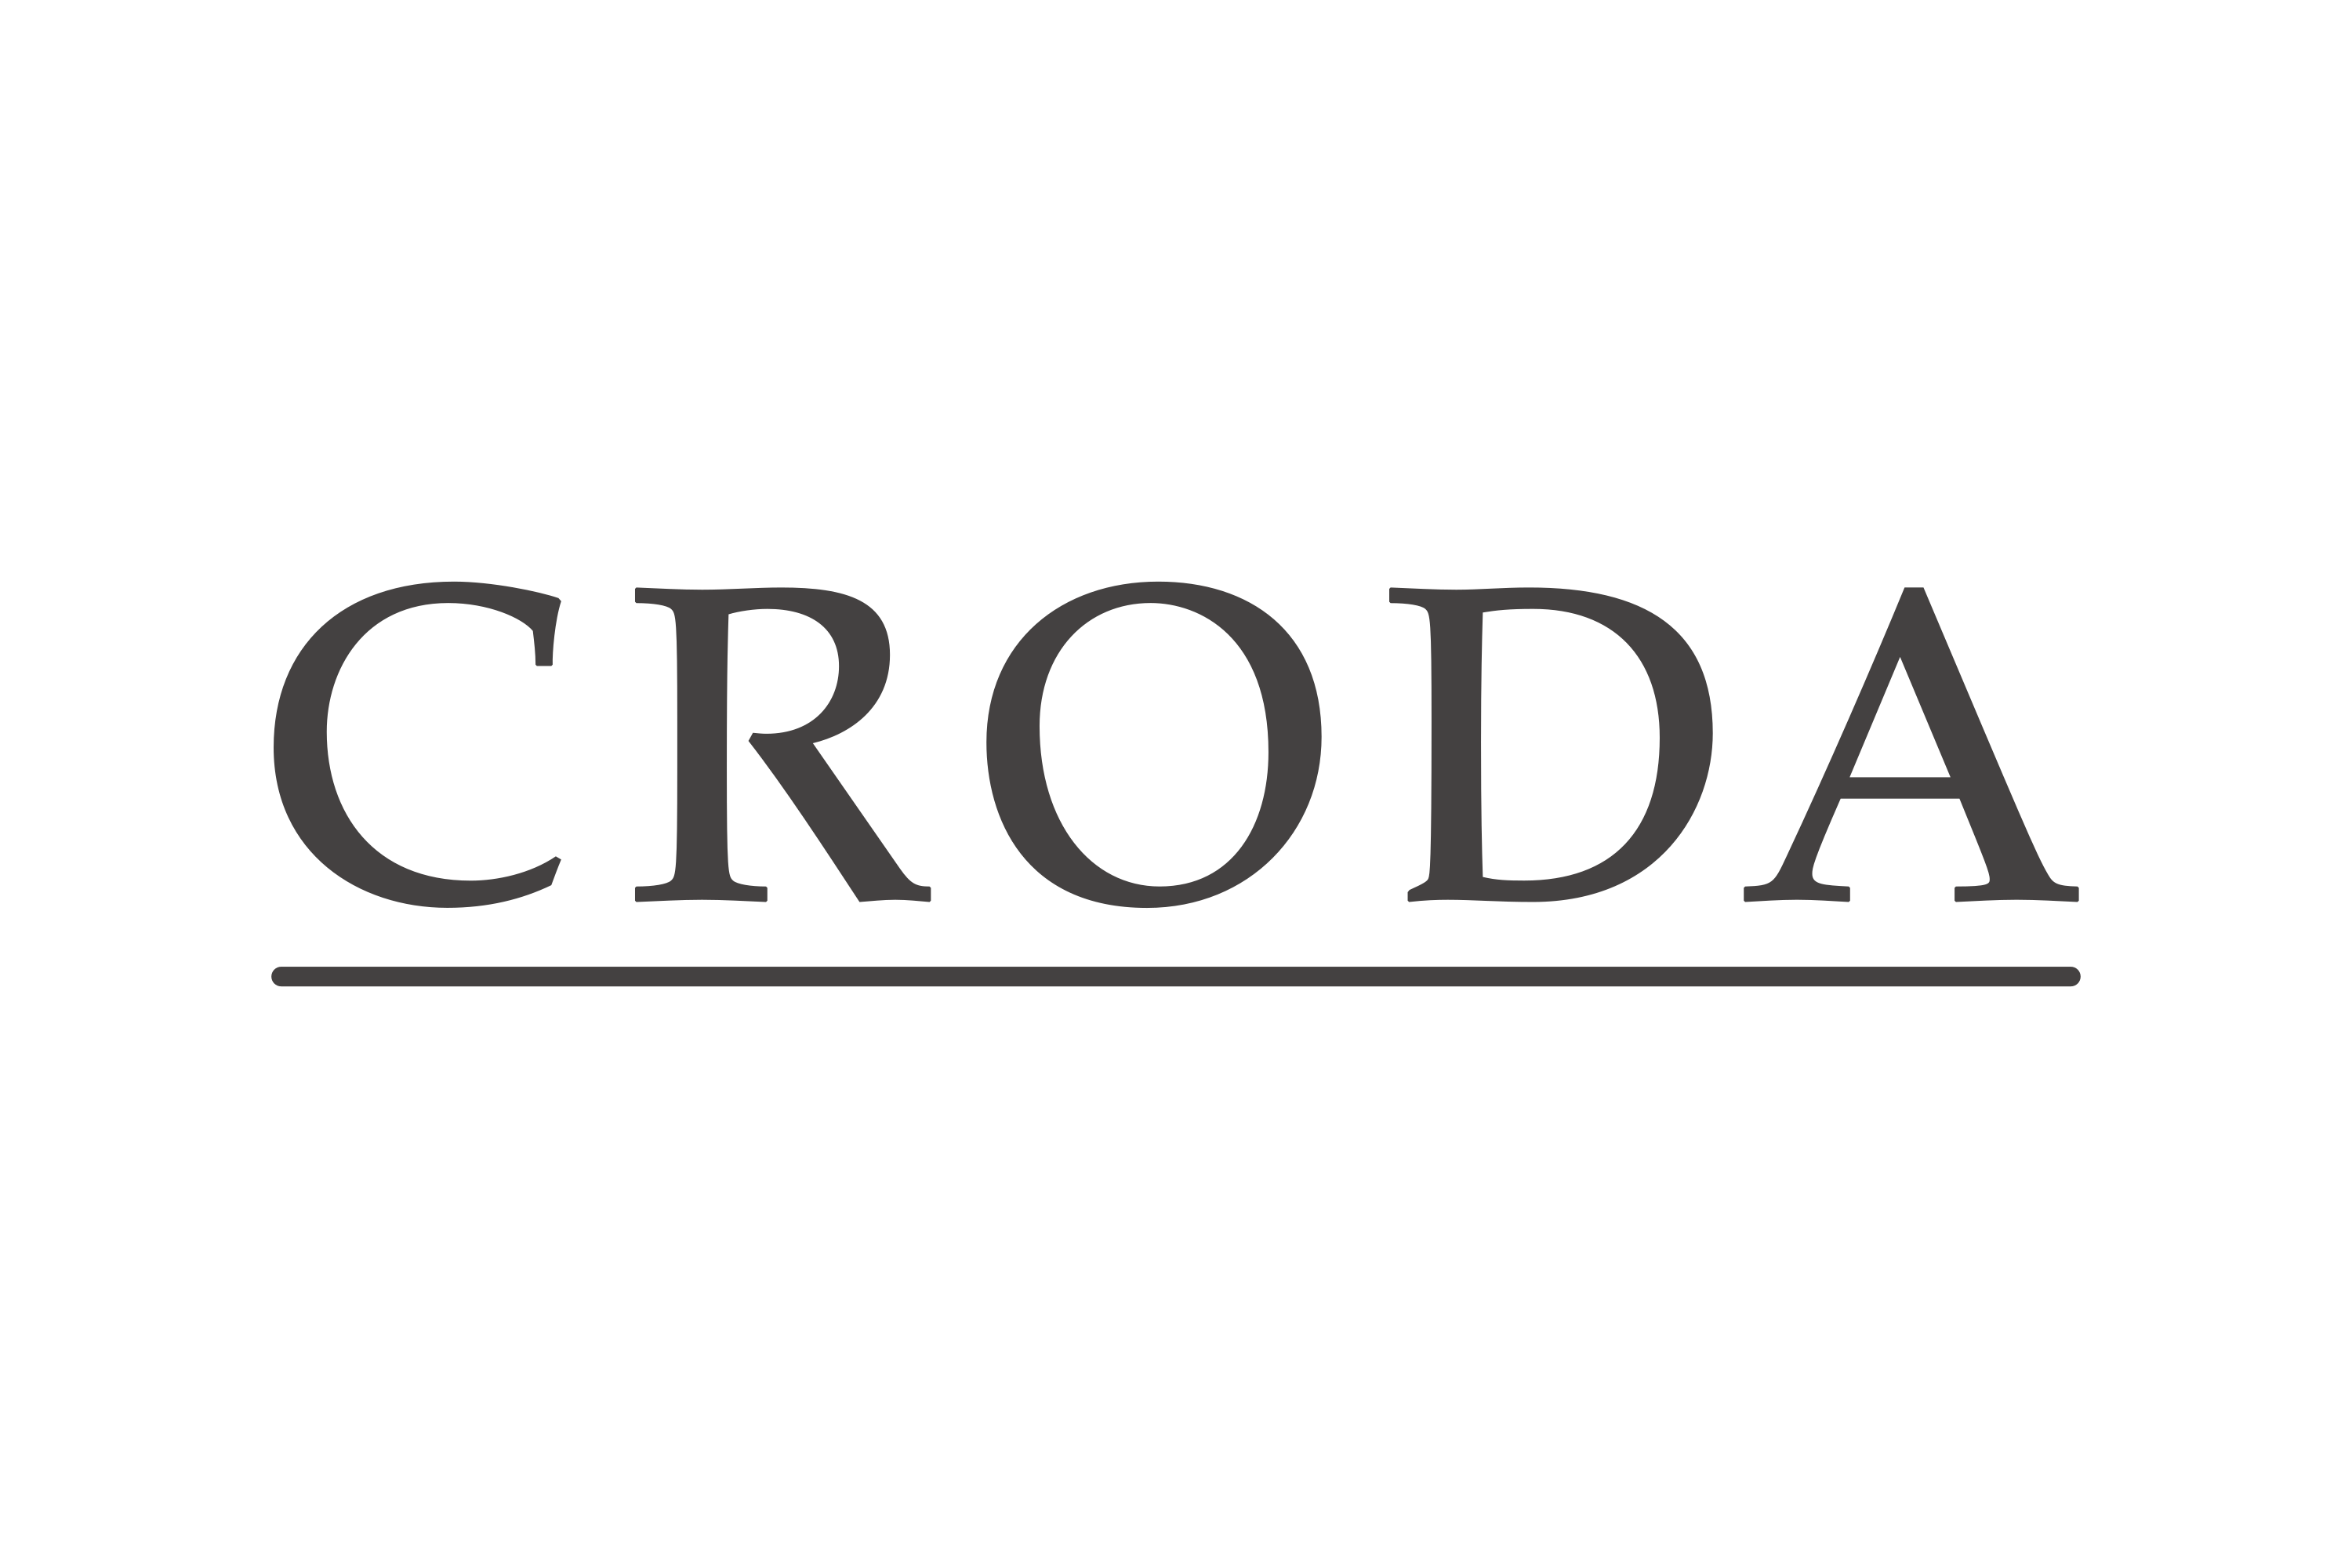 Croda International